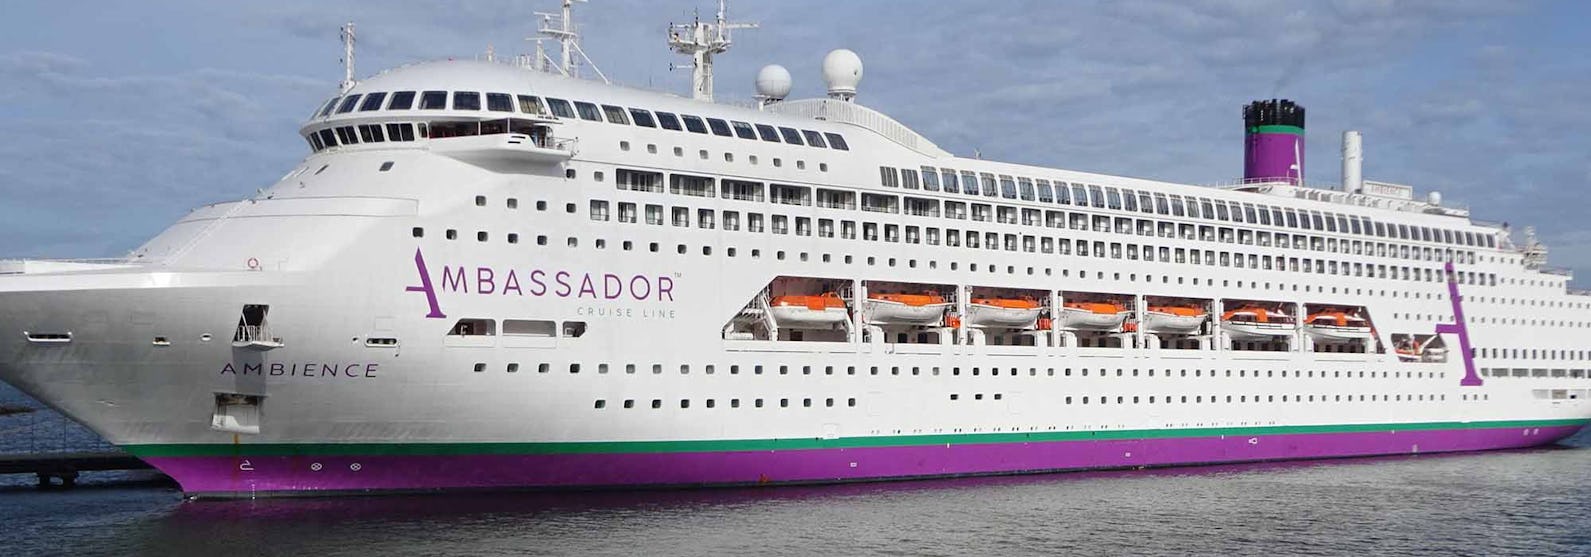 Ambassador's flagship, Ambience docked at a port